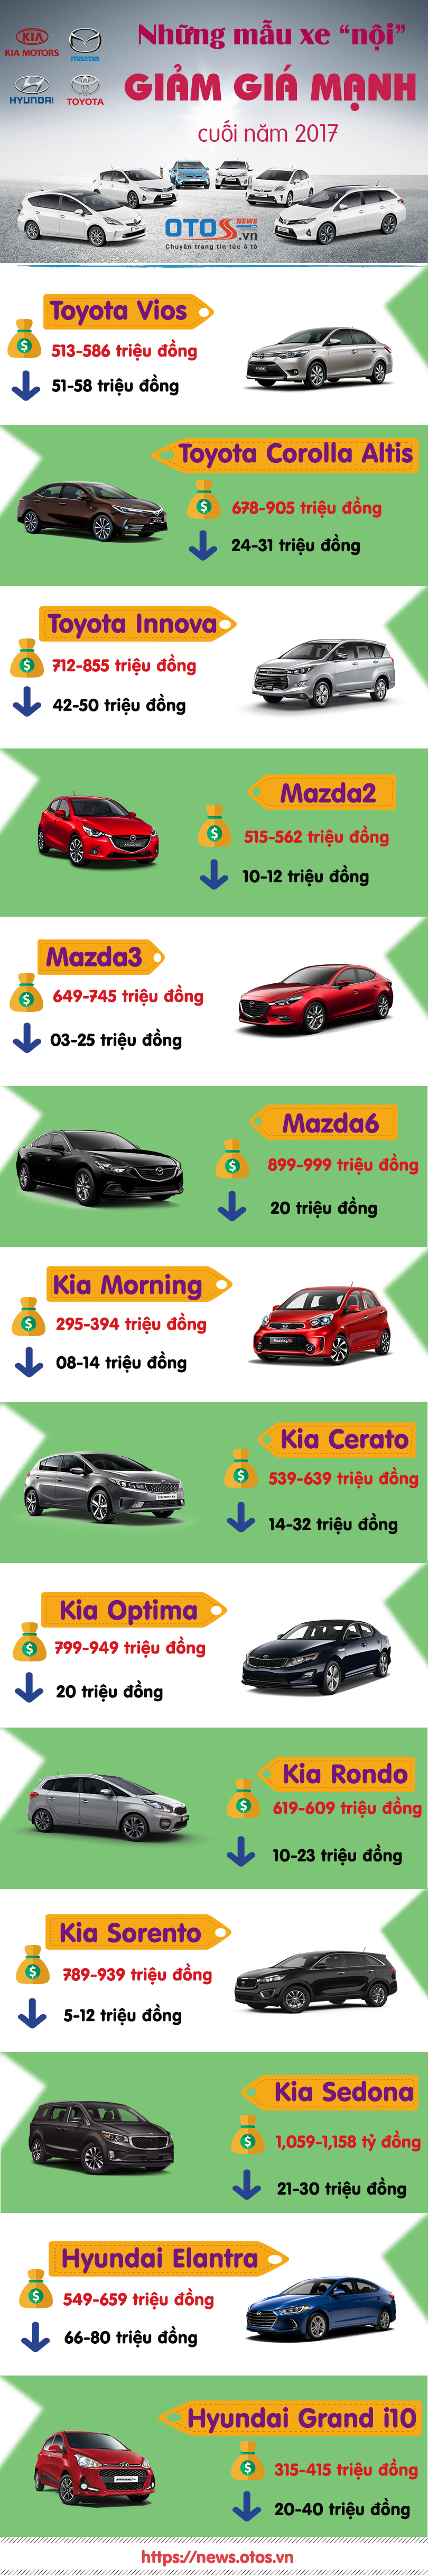 [Infographic] - Những mẫu xe 